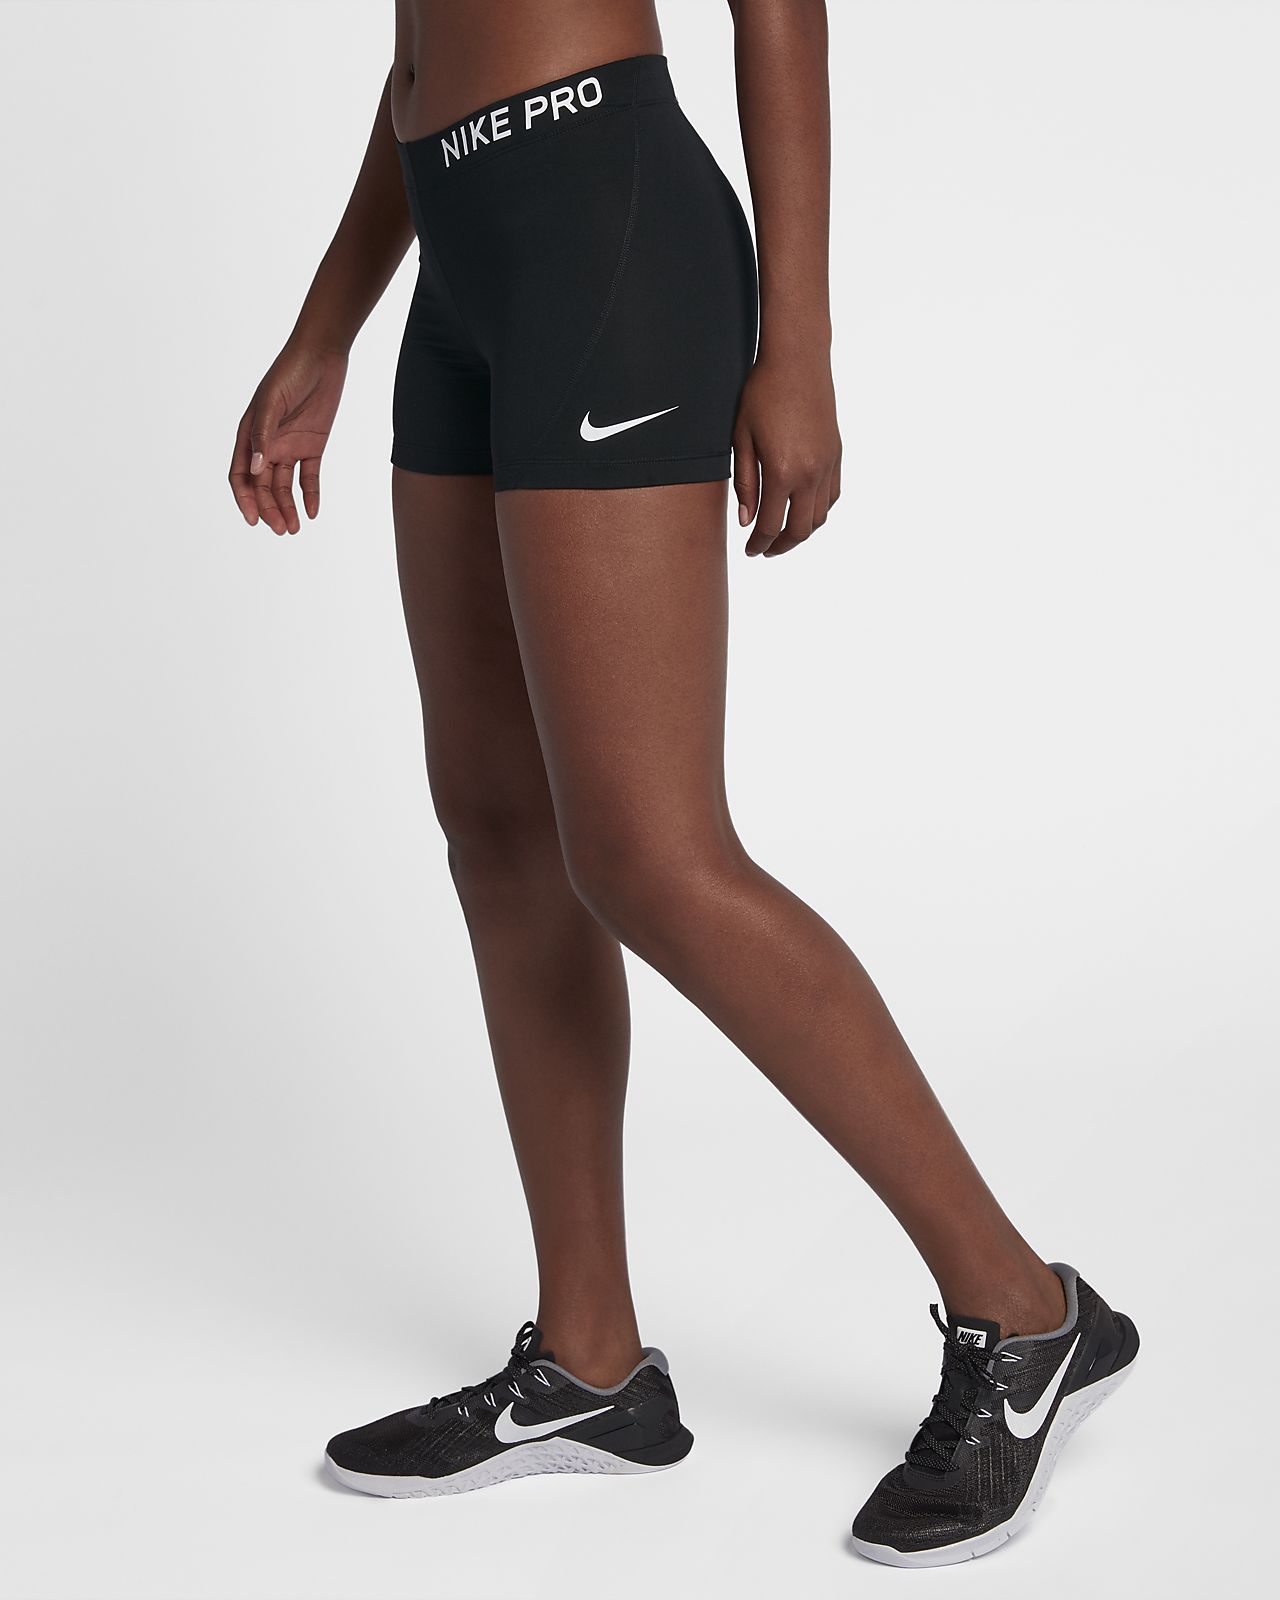 nike gym shorts womens,OFF 57%,www.teodoromora.com